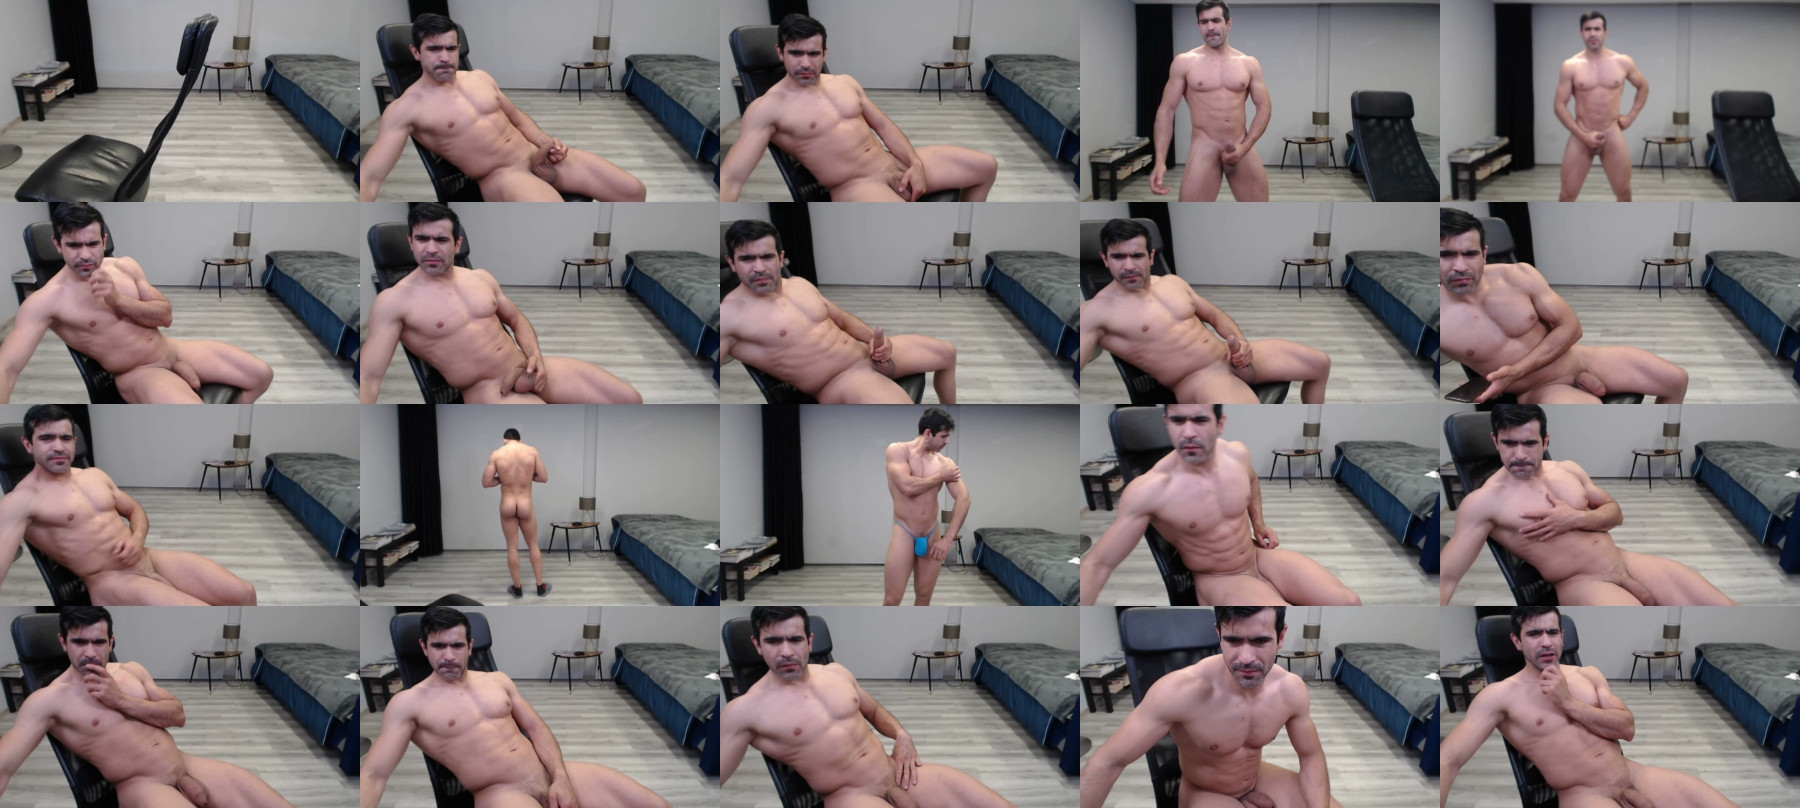 Latino23bom  23-05-2021 Male Webcam